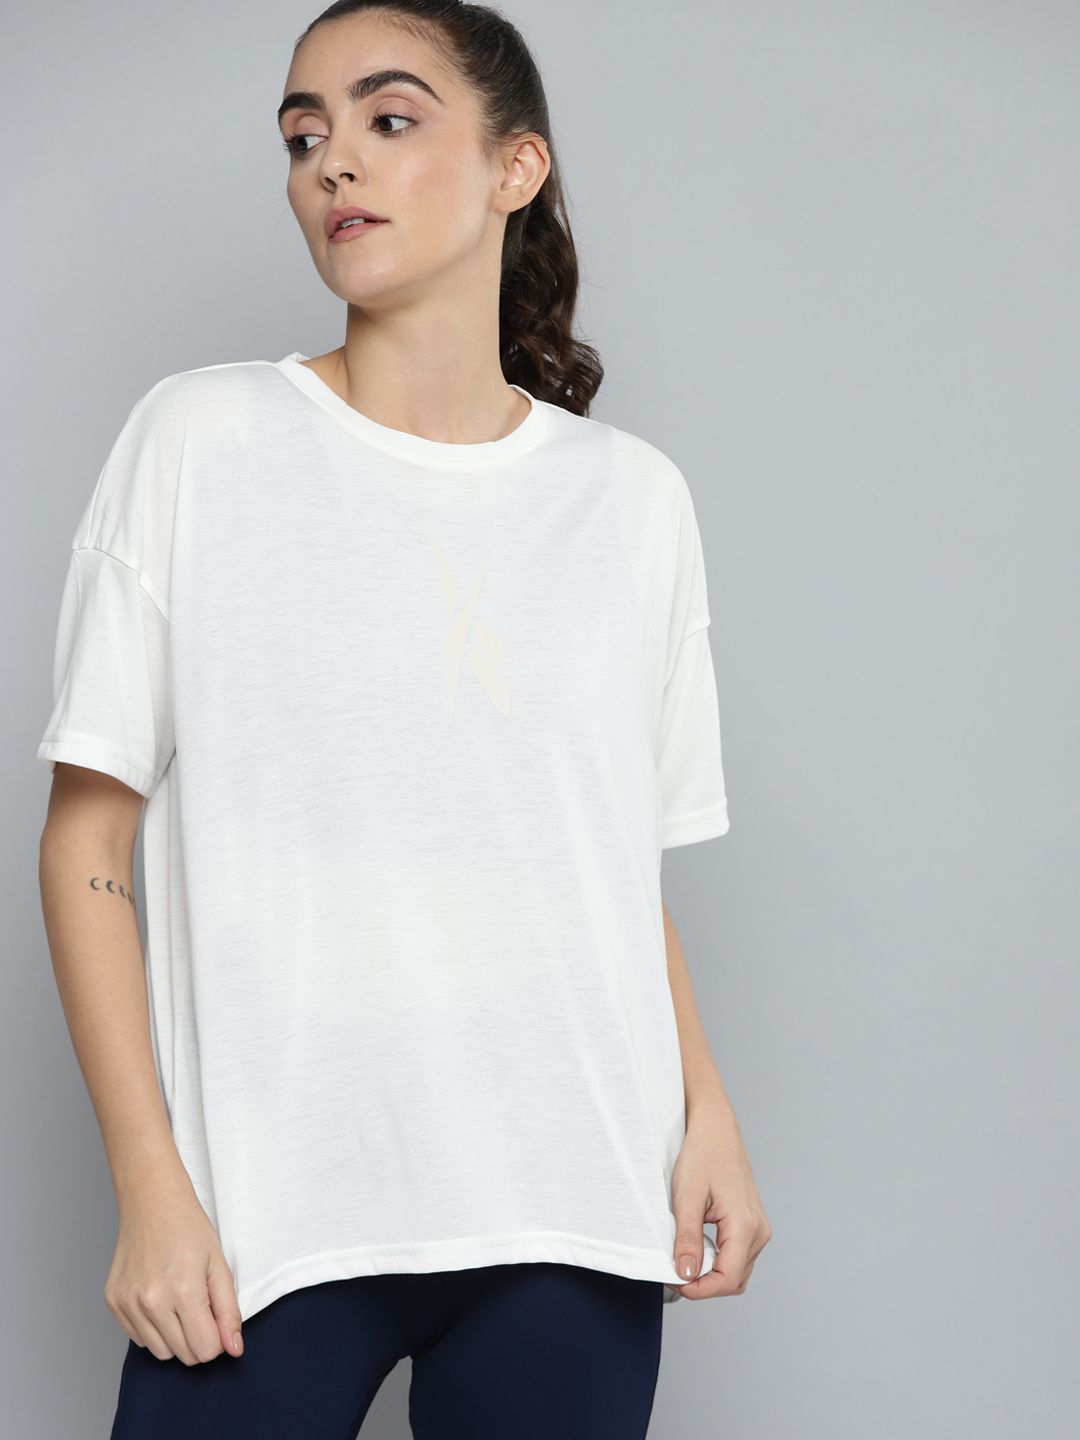 Reebok Women White Printed TS Graphic  T-shirt Price in India